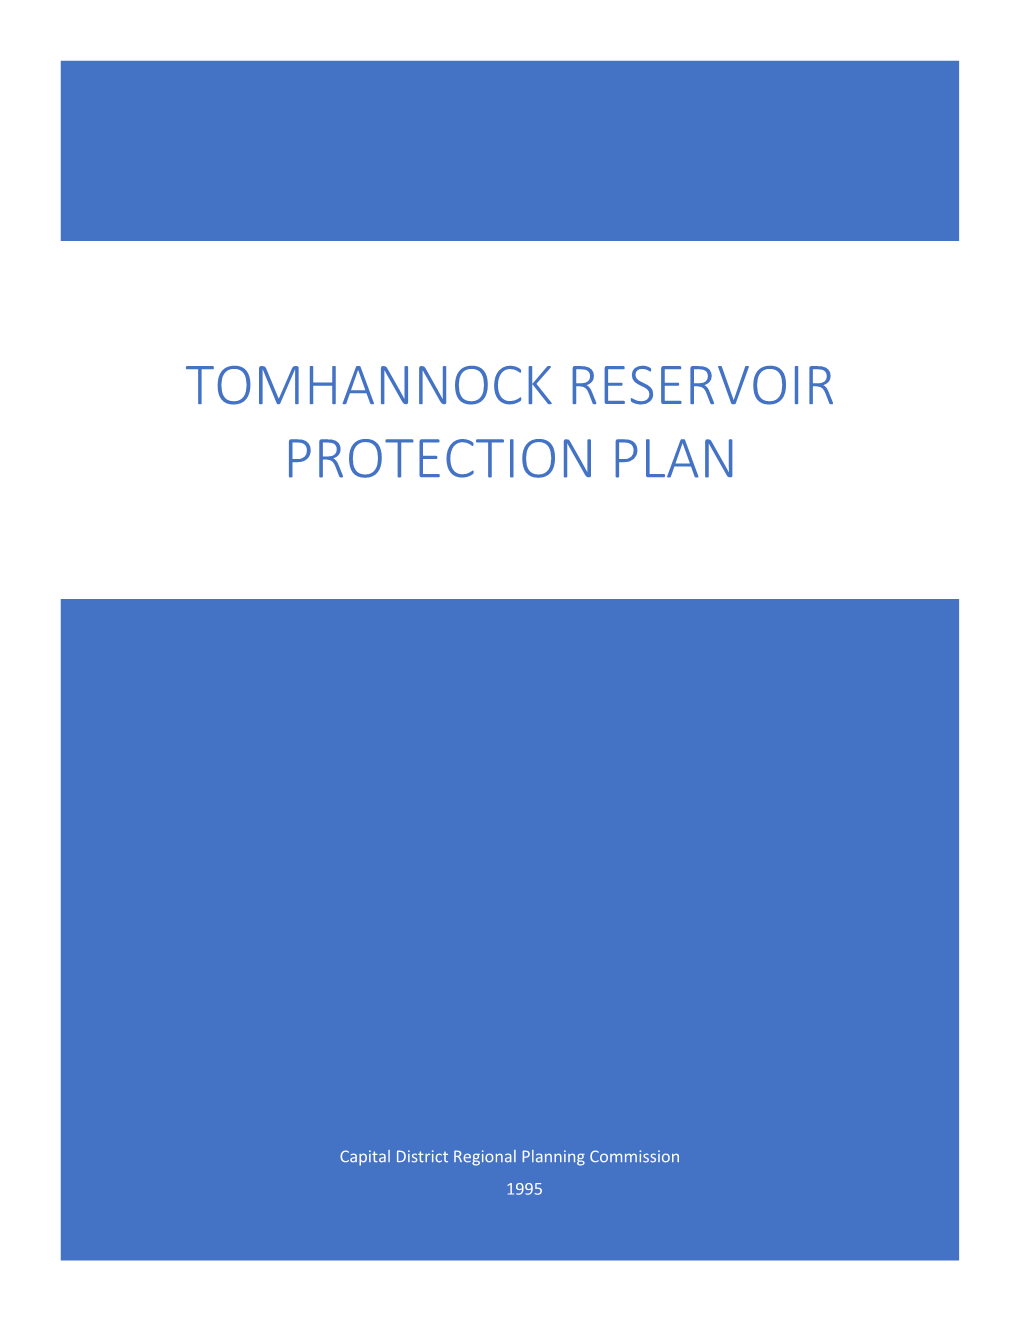 Tomhannock Reservoir Protection Plan